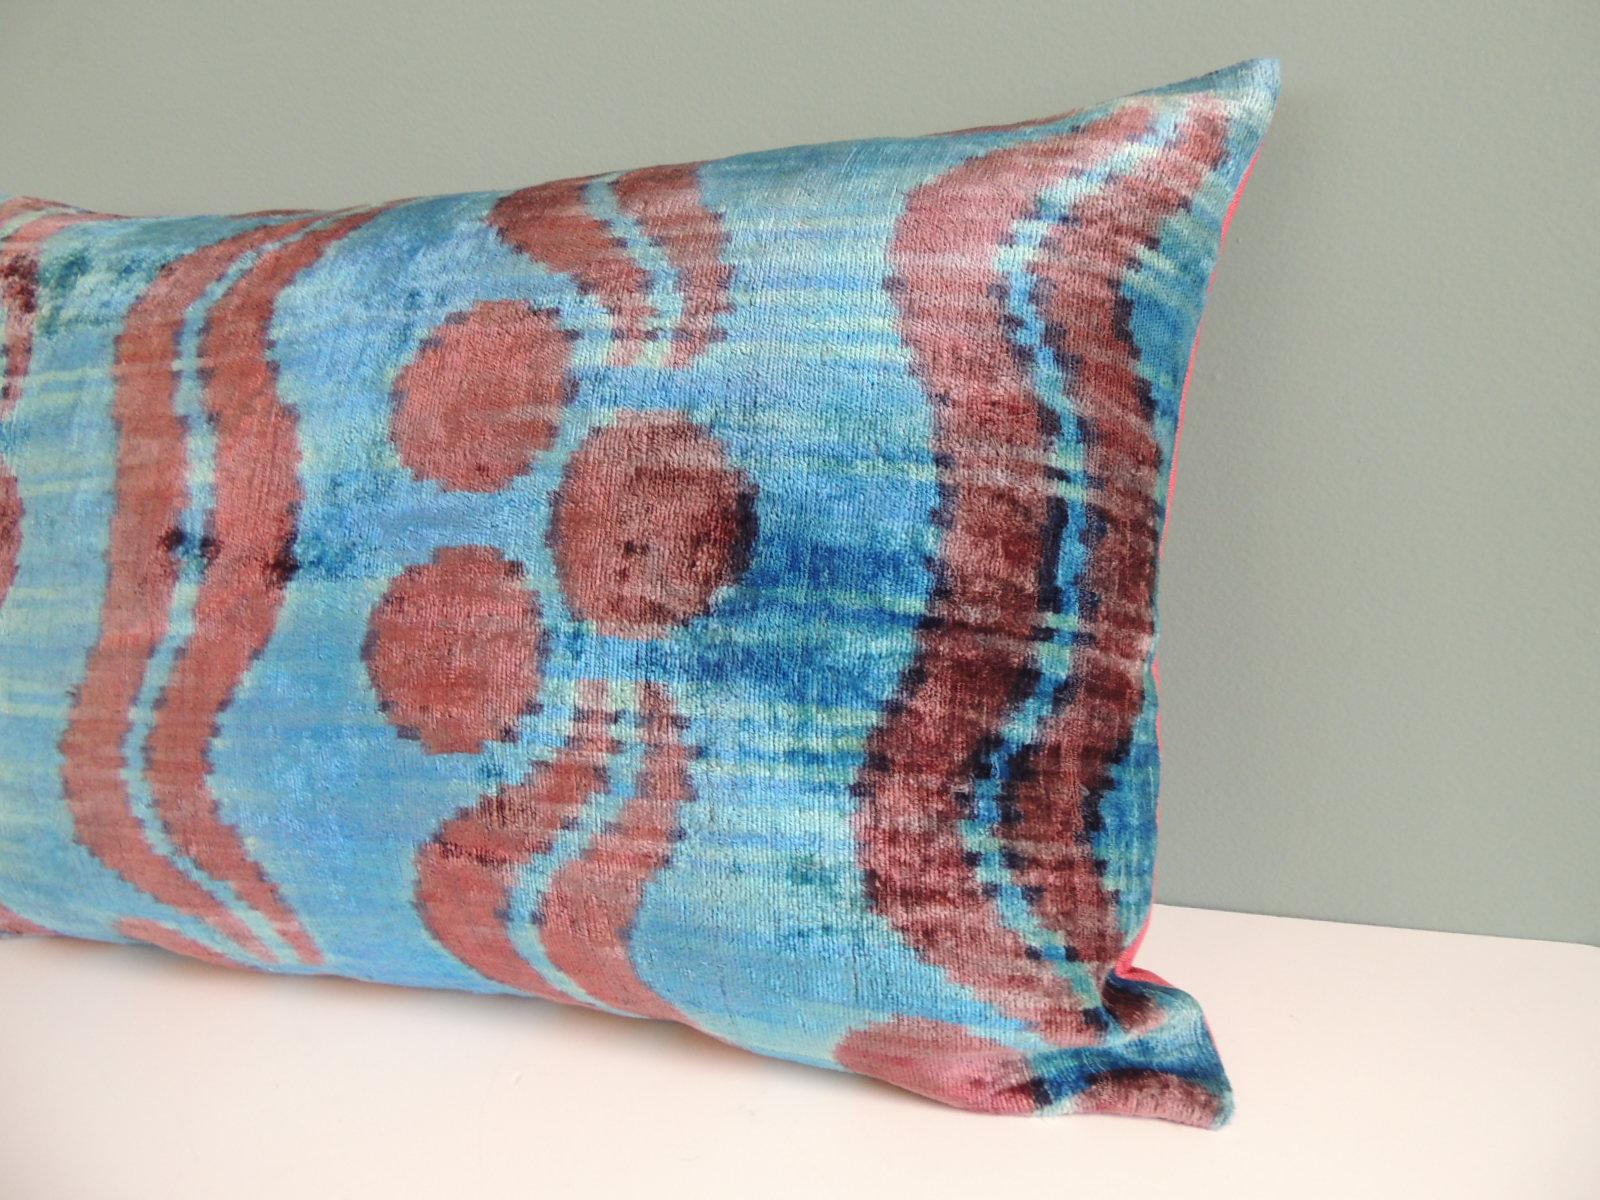 Moorish Ikat Blue and Pink Decorative Bolster Pillow with Hot Pink Linen Backing